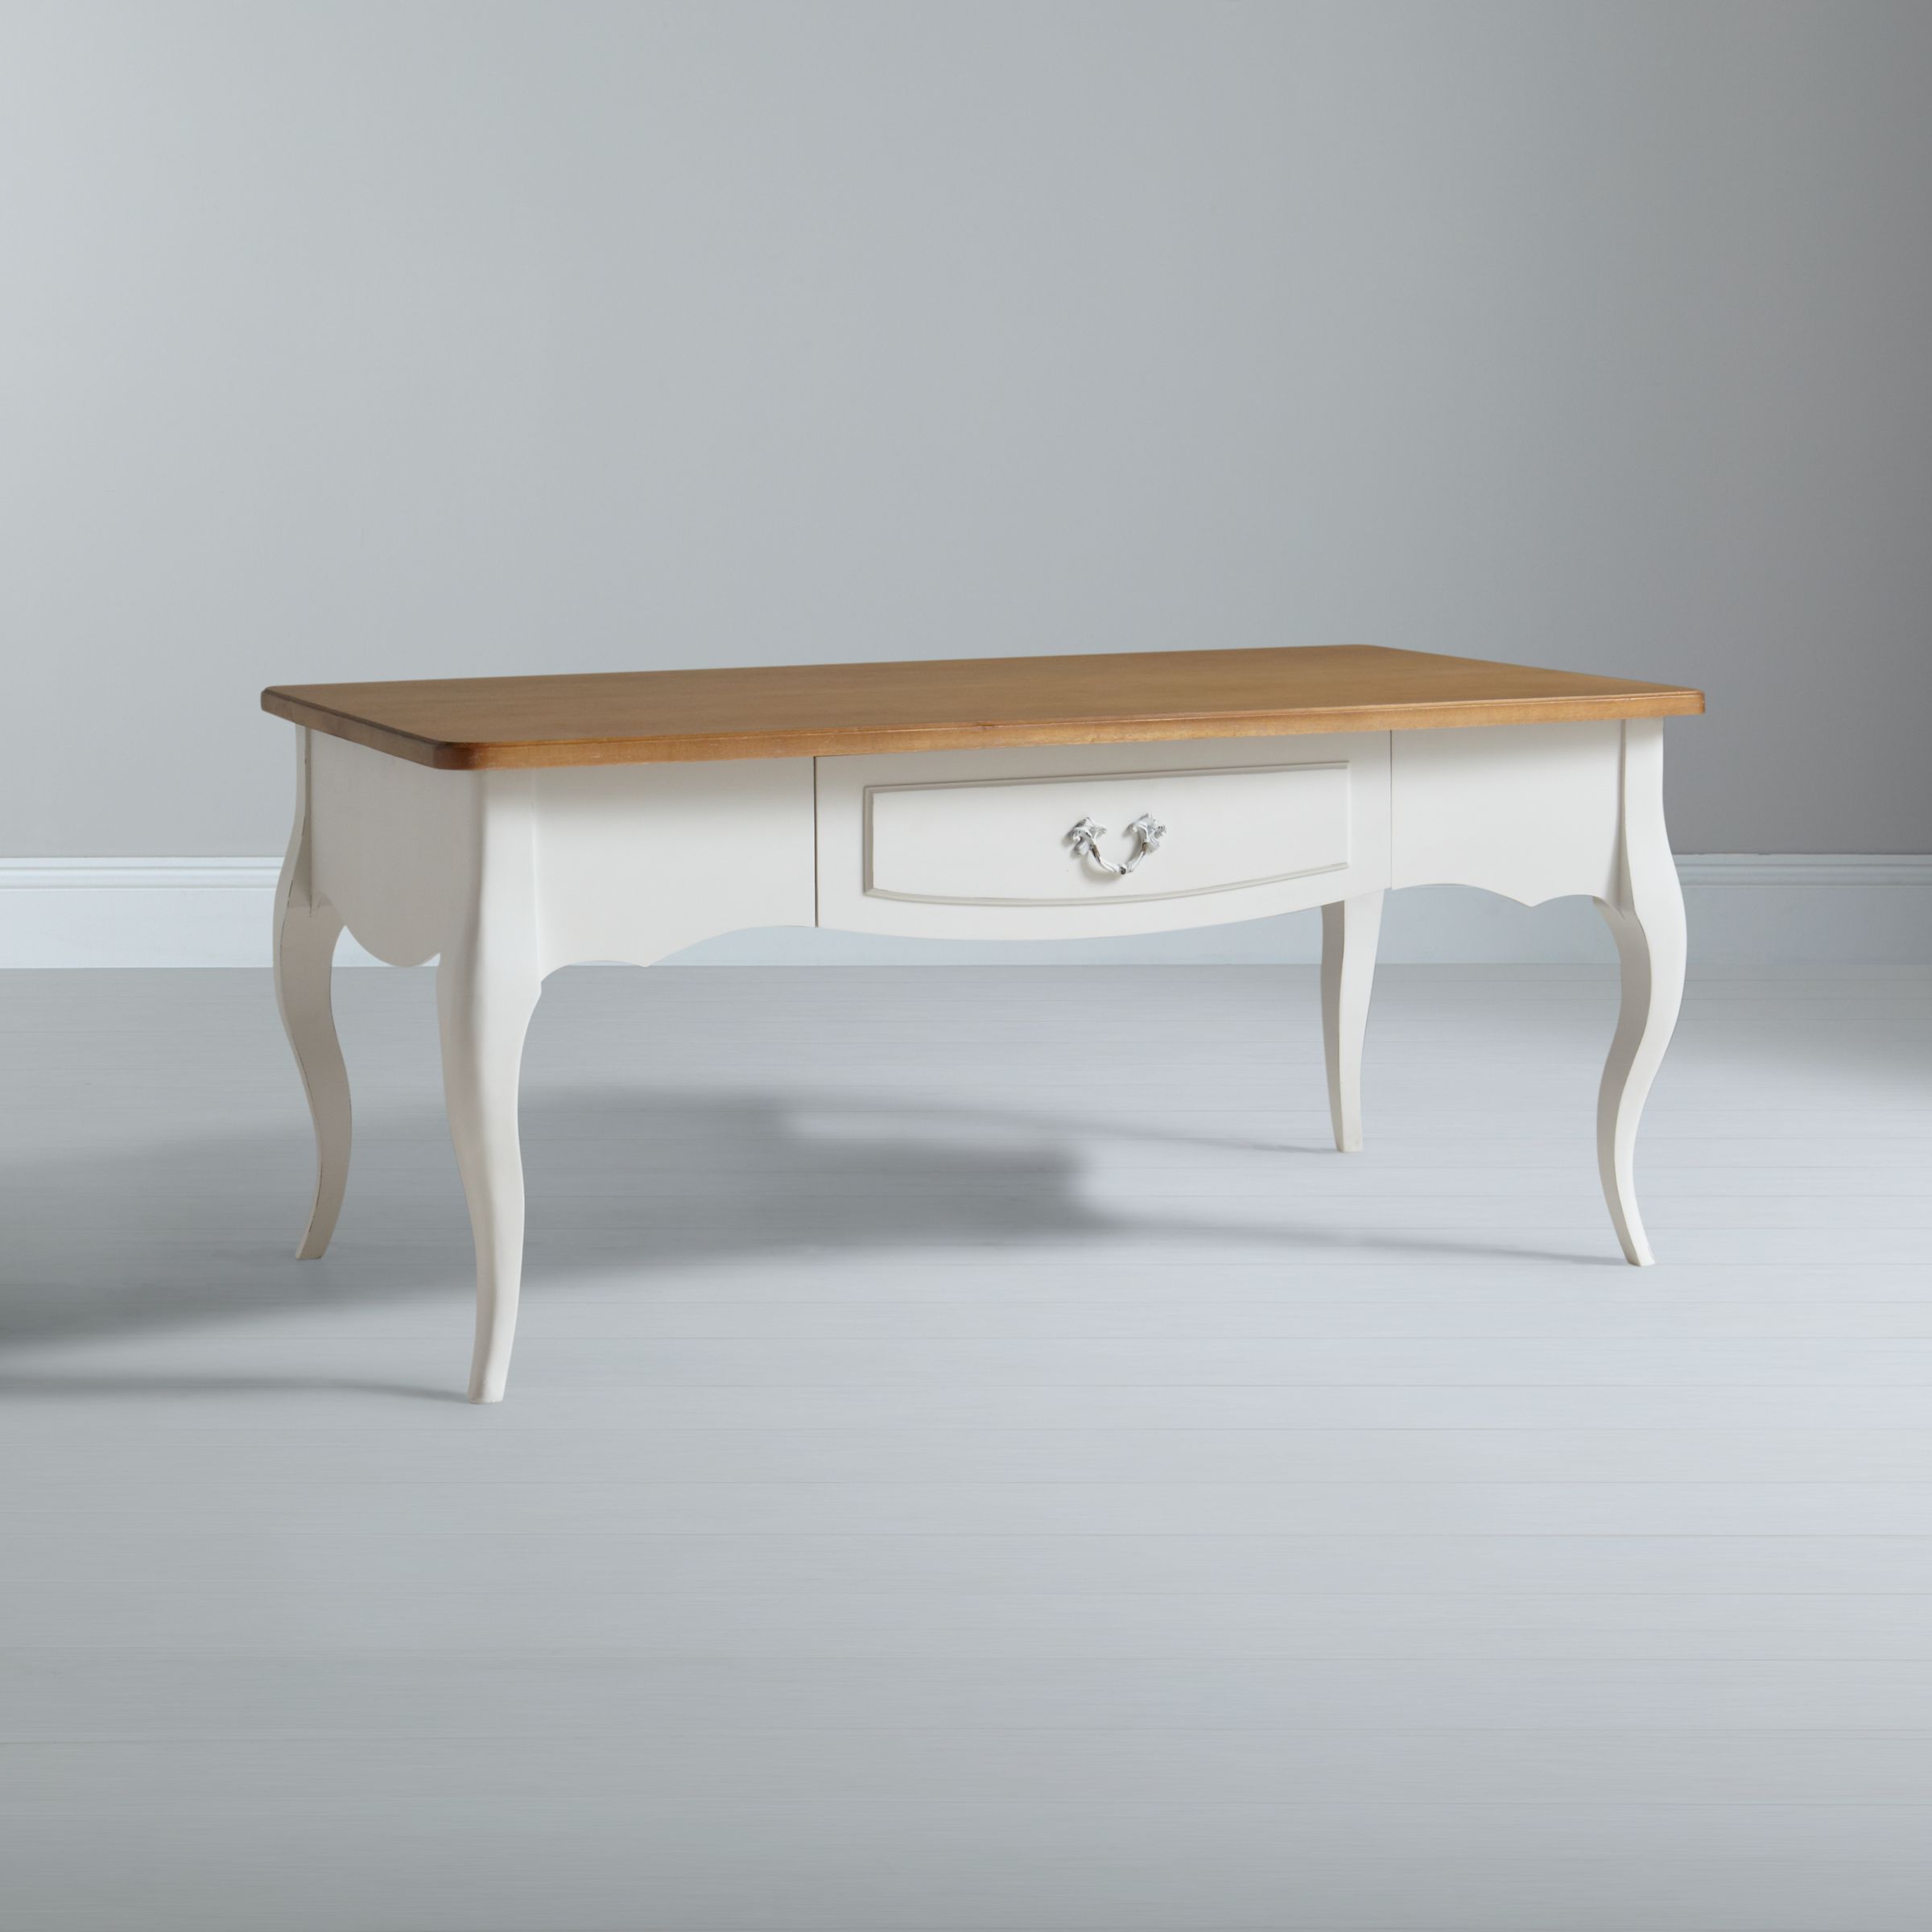 John Lewis Camille Coffee Table, Wood Top, width 110cm